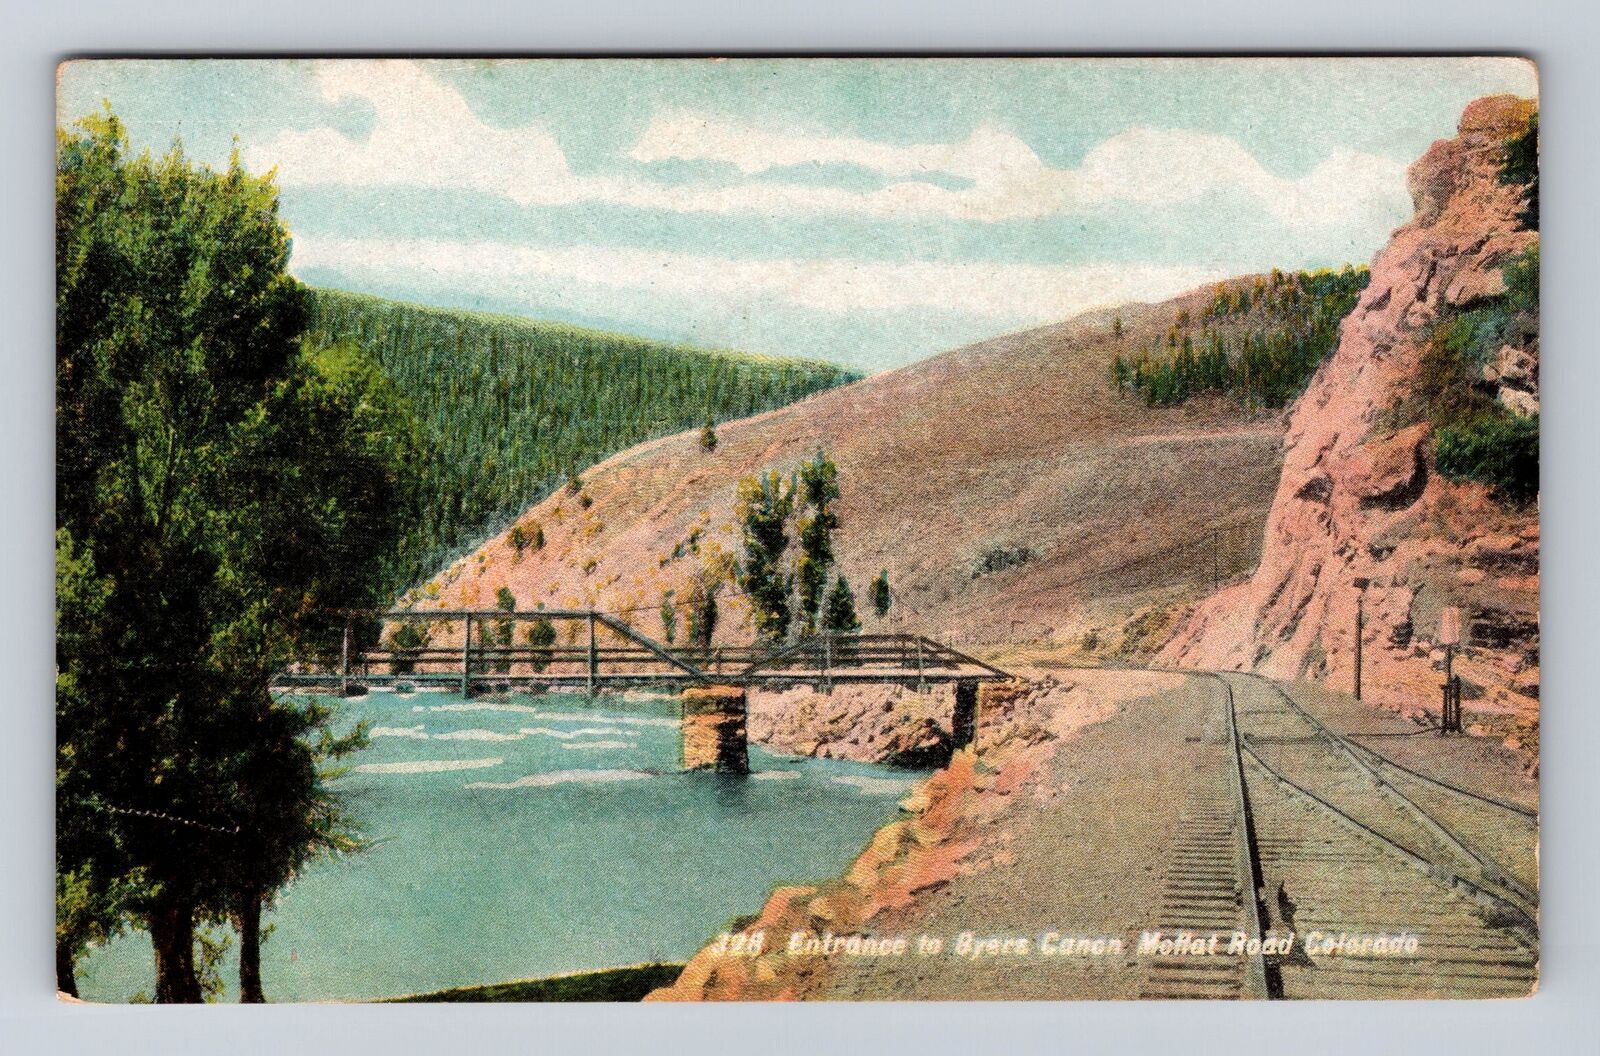 Moffat Road CO-Colorado, Entrance to Byers Canon, Vintage Souvenir Postcard